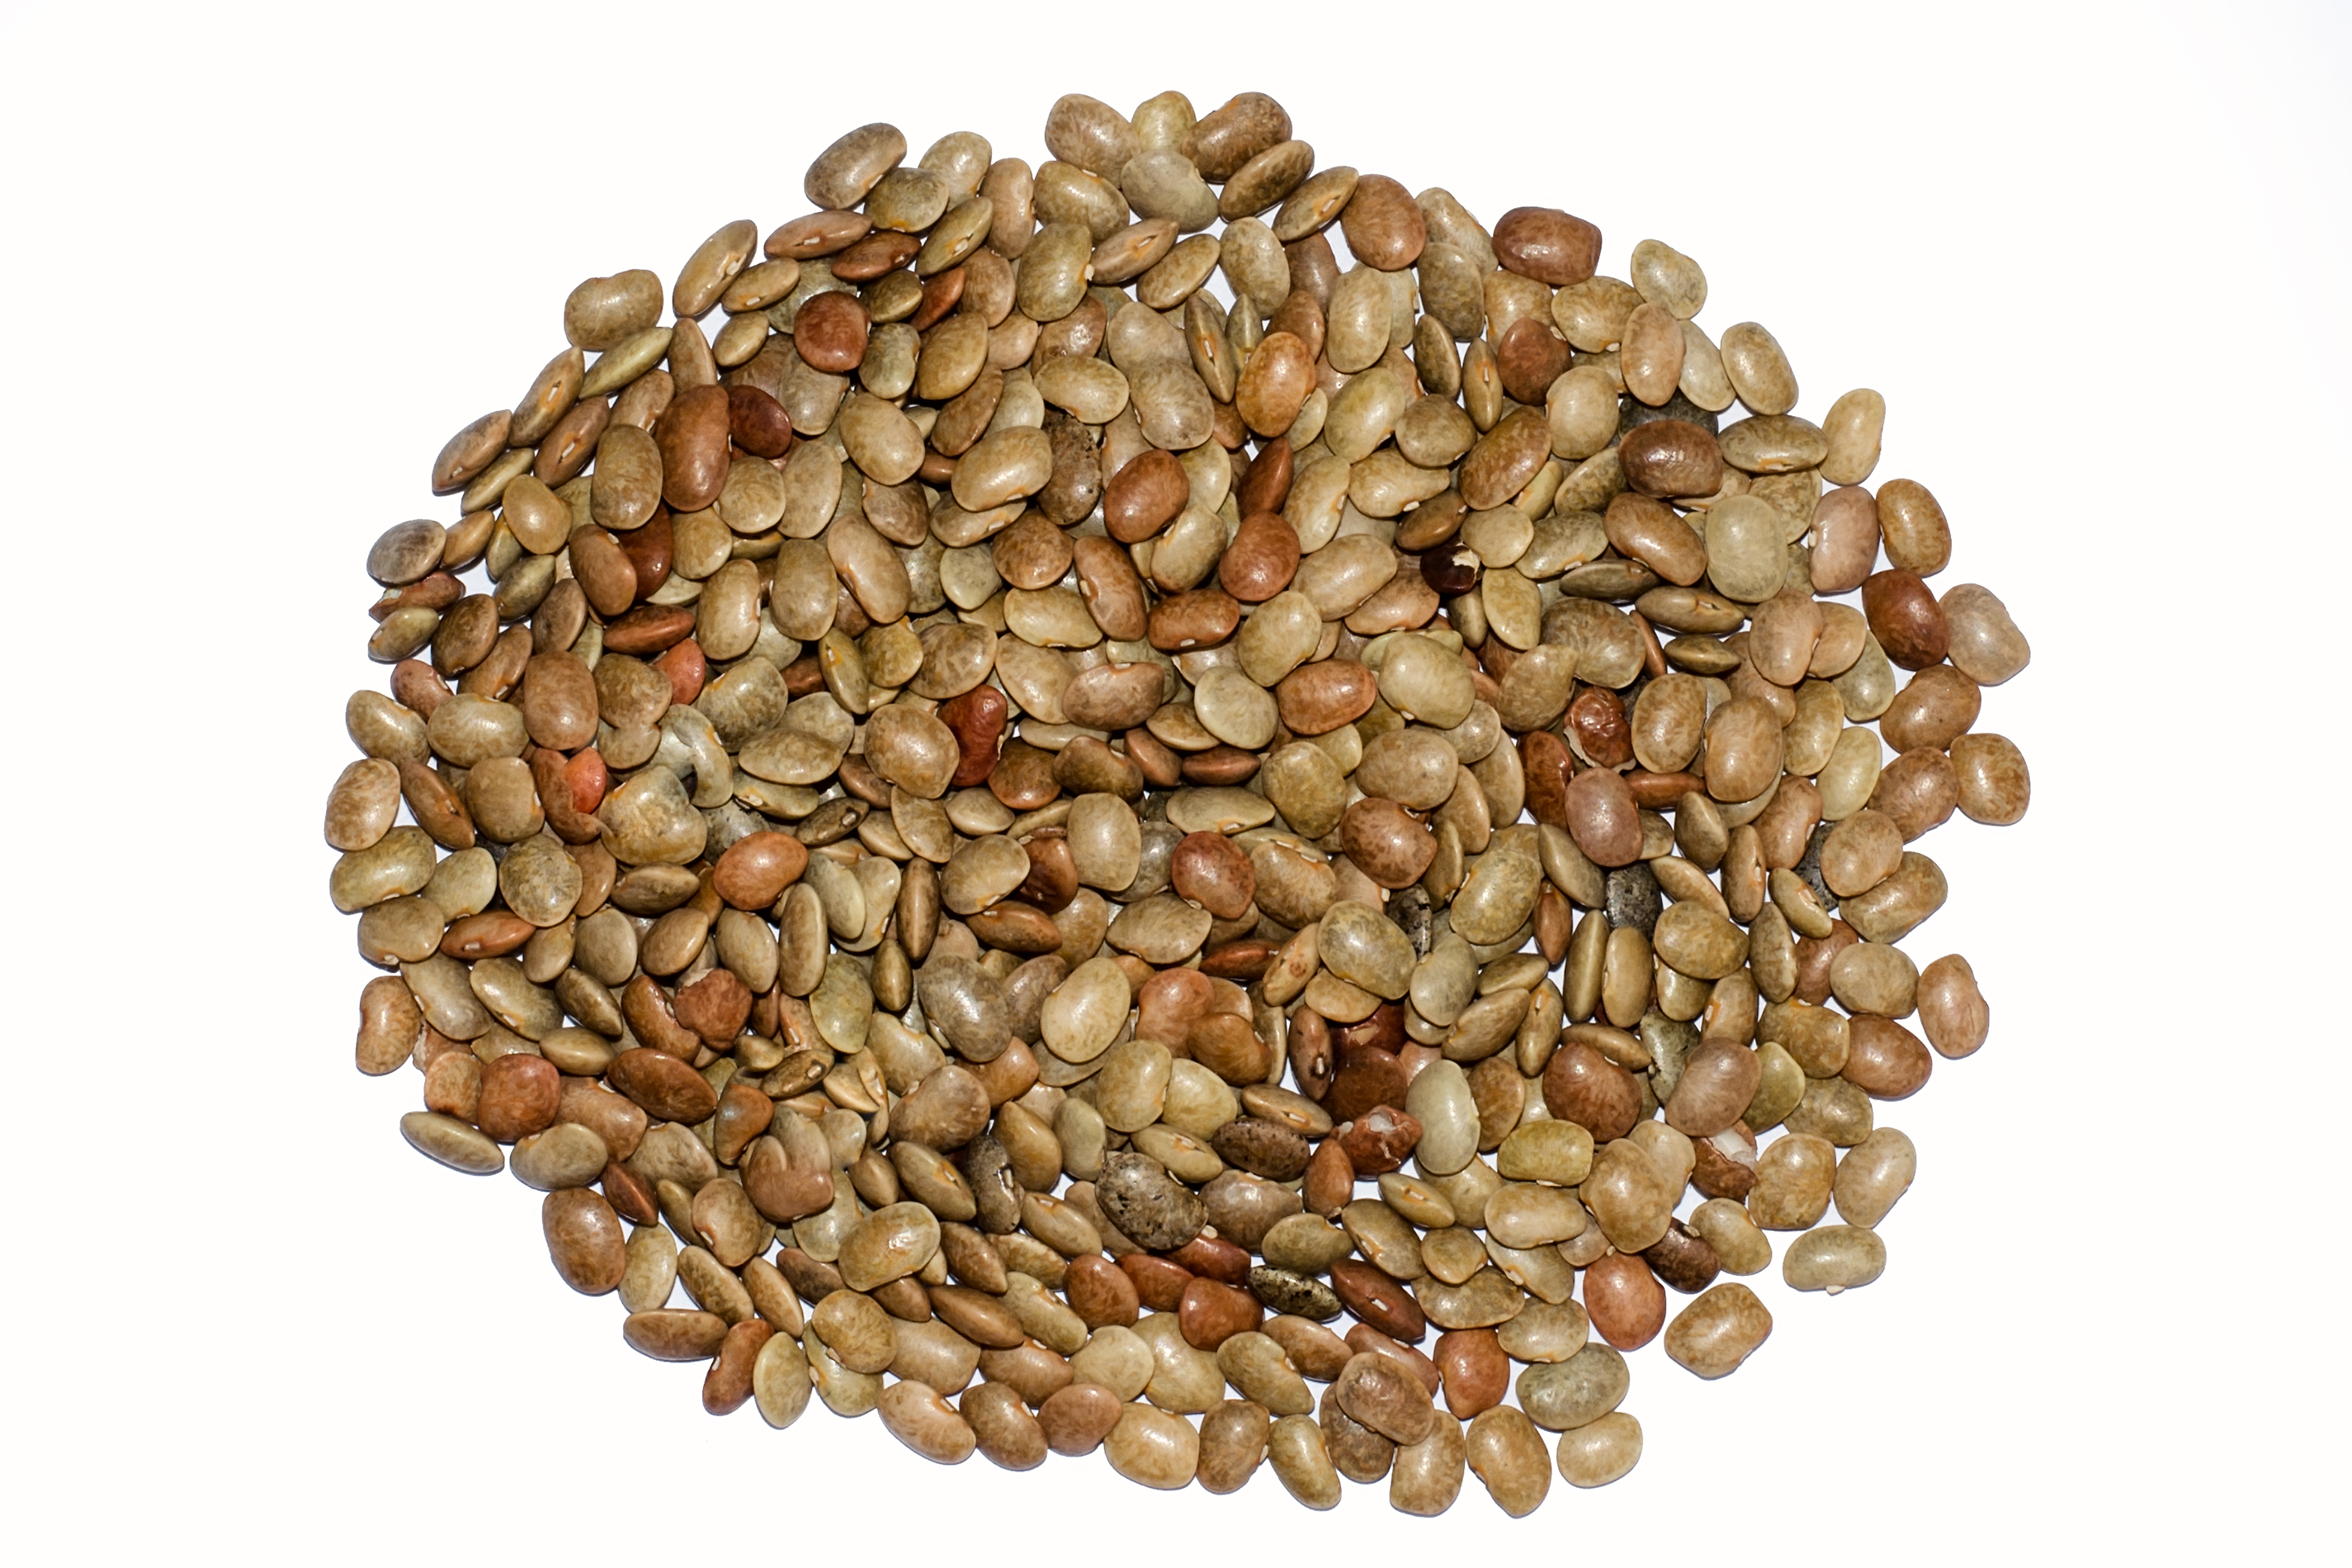 Typical crop seeds